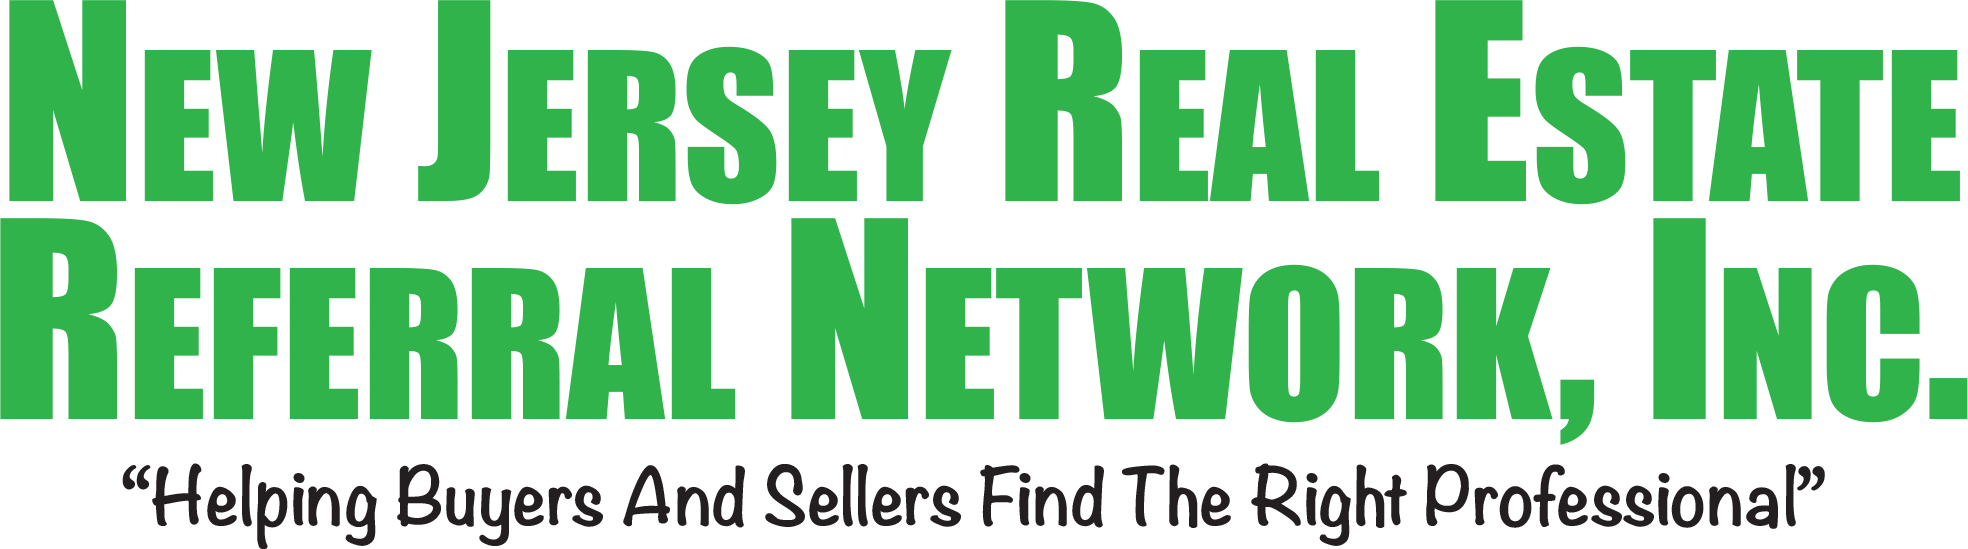 NJ Real Estate Referral Network